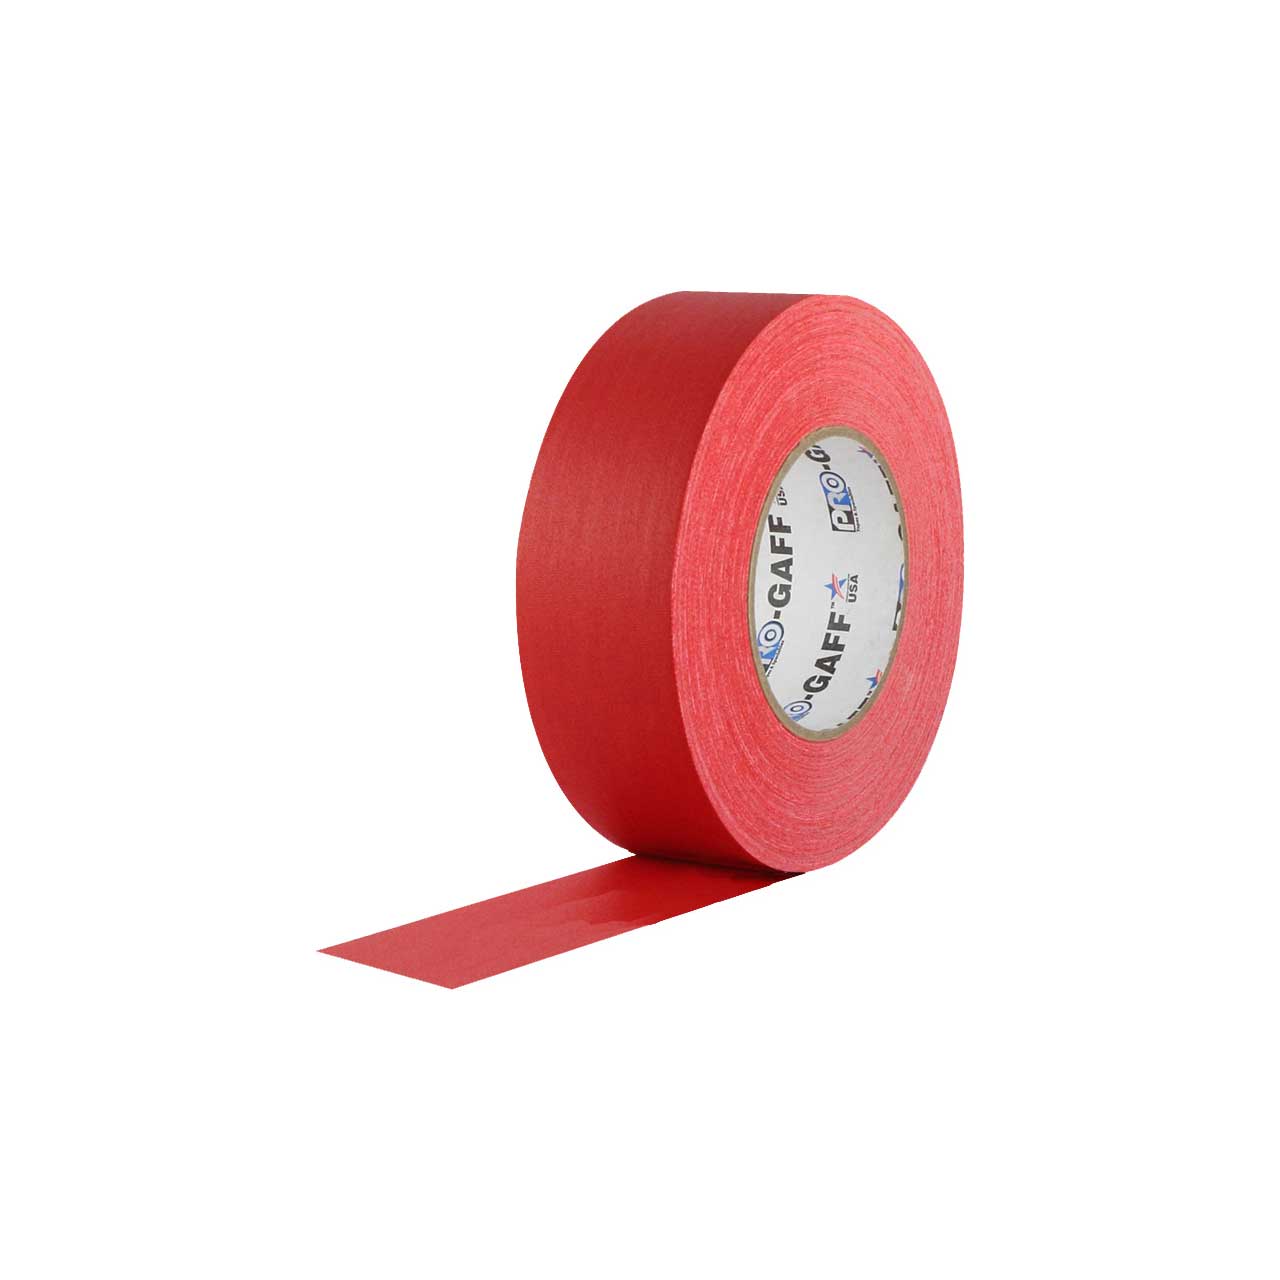 1 Roll Gaffers Tape Red 3 Inch x 60 Yards per Roll Gaff Tape 